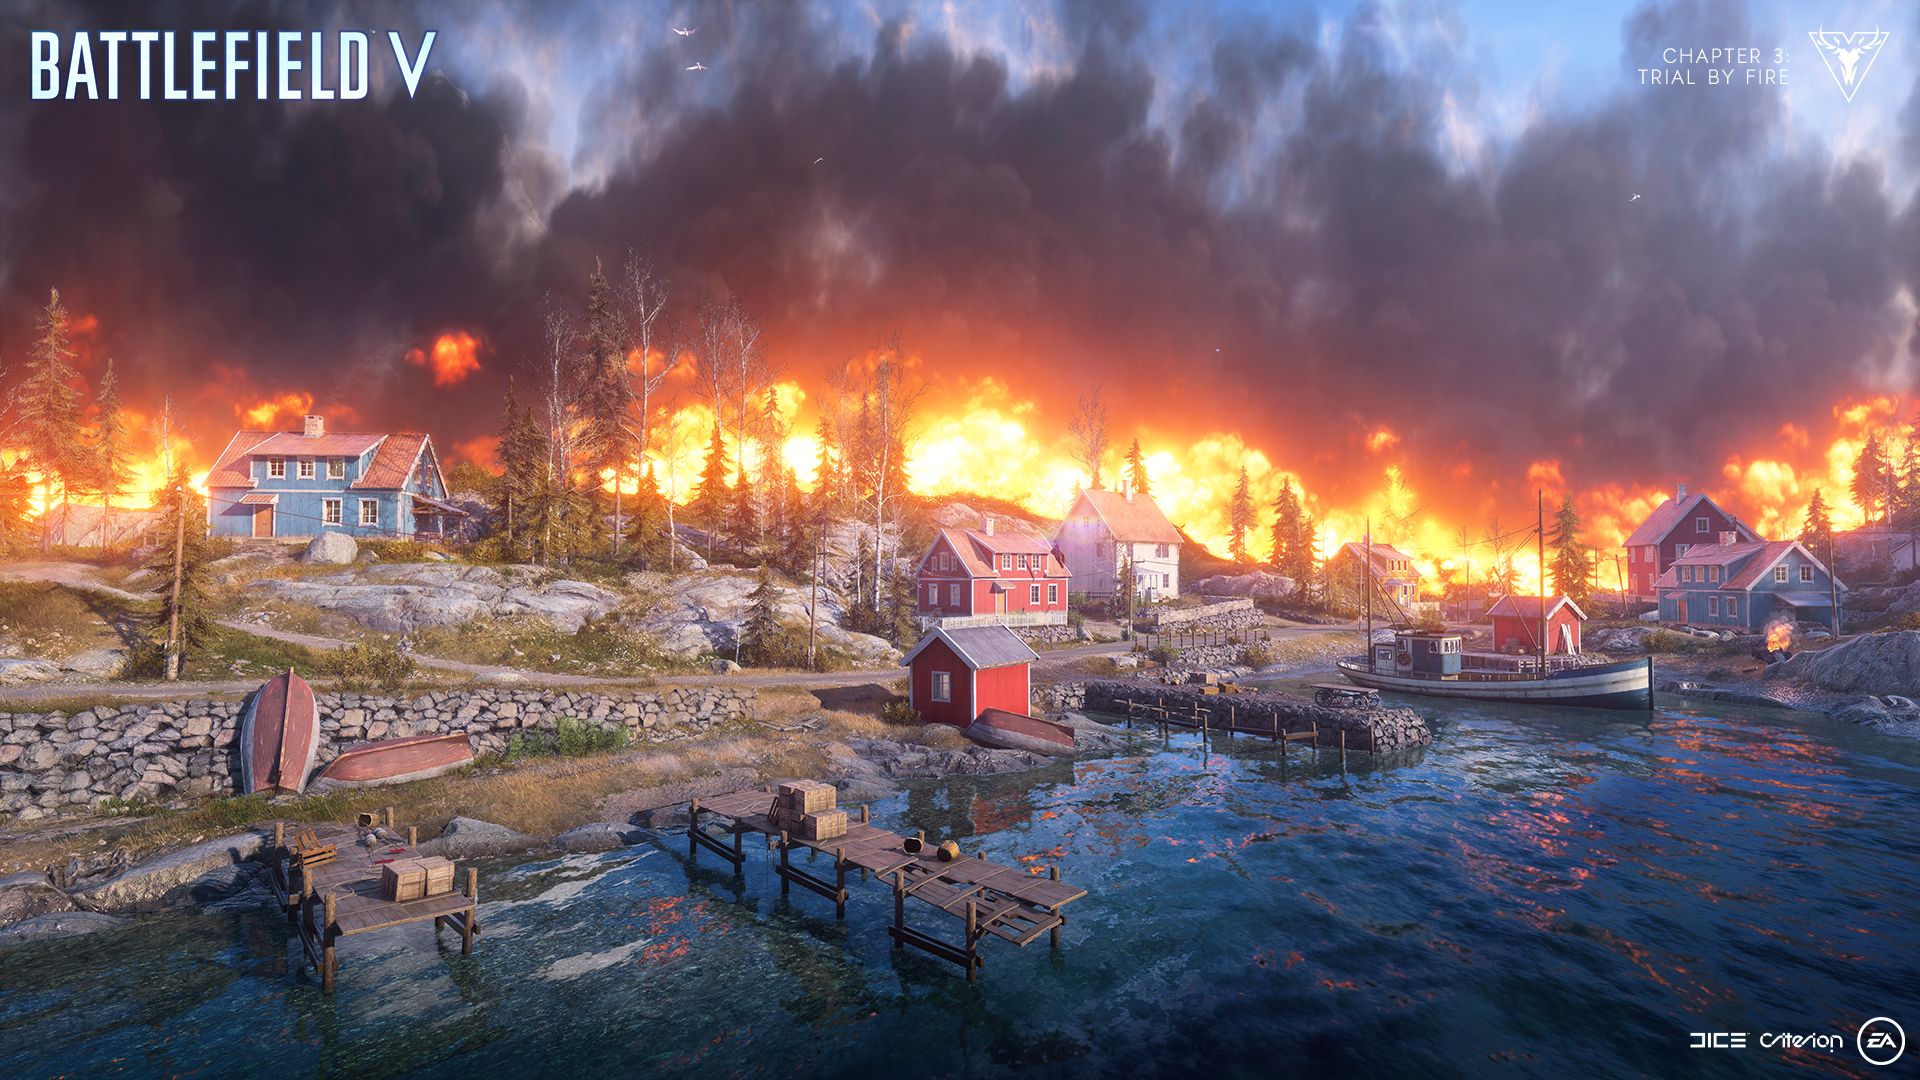 Battlefield V Firestorm review - The Verge